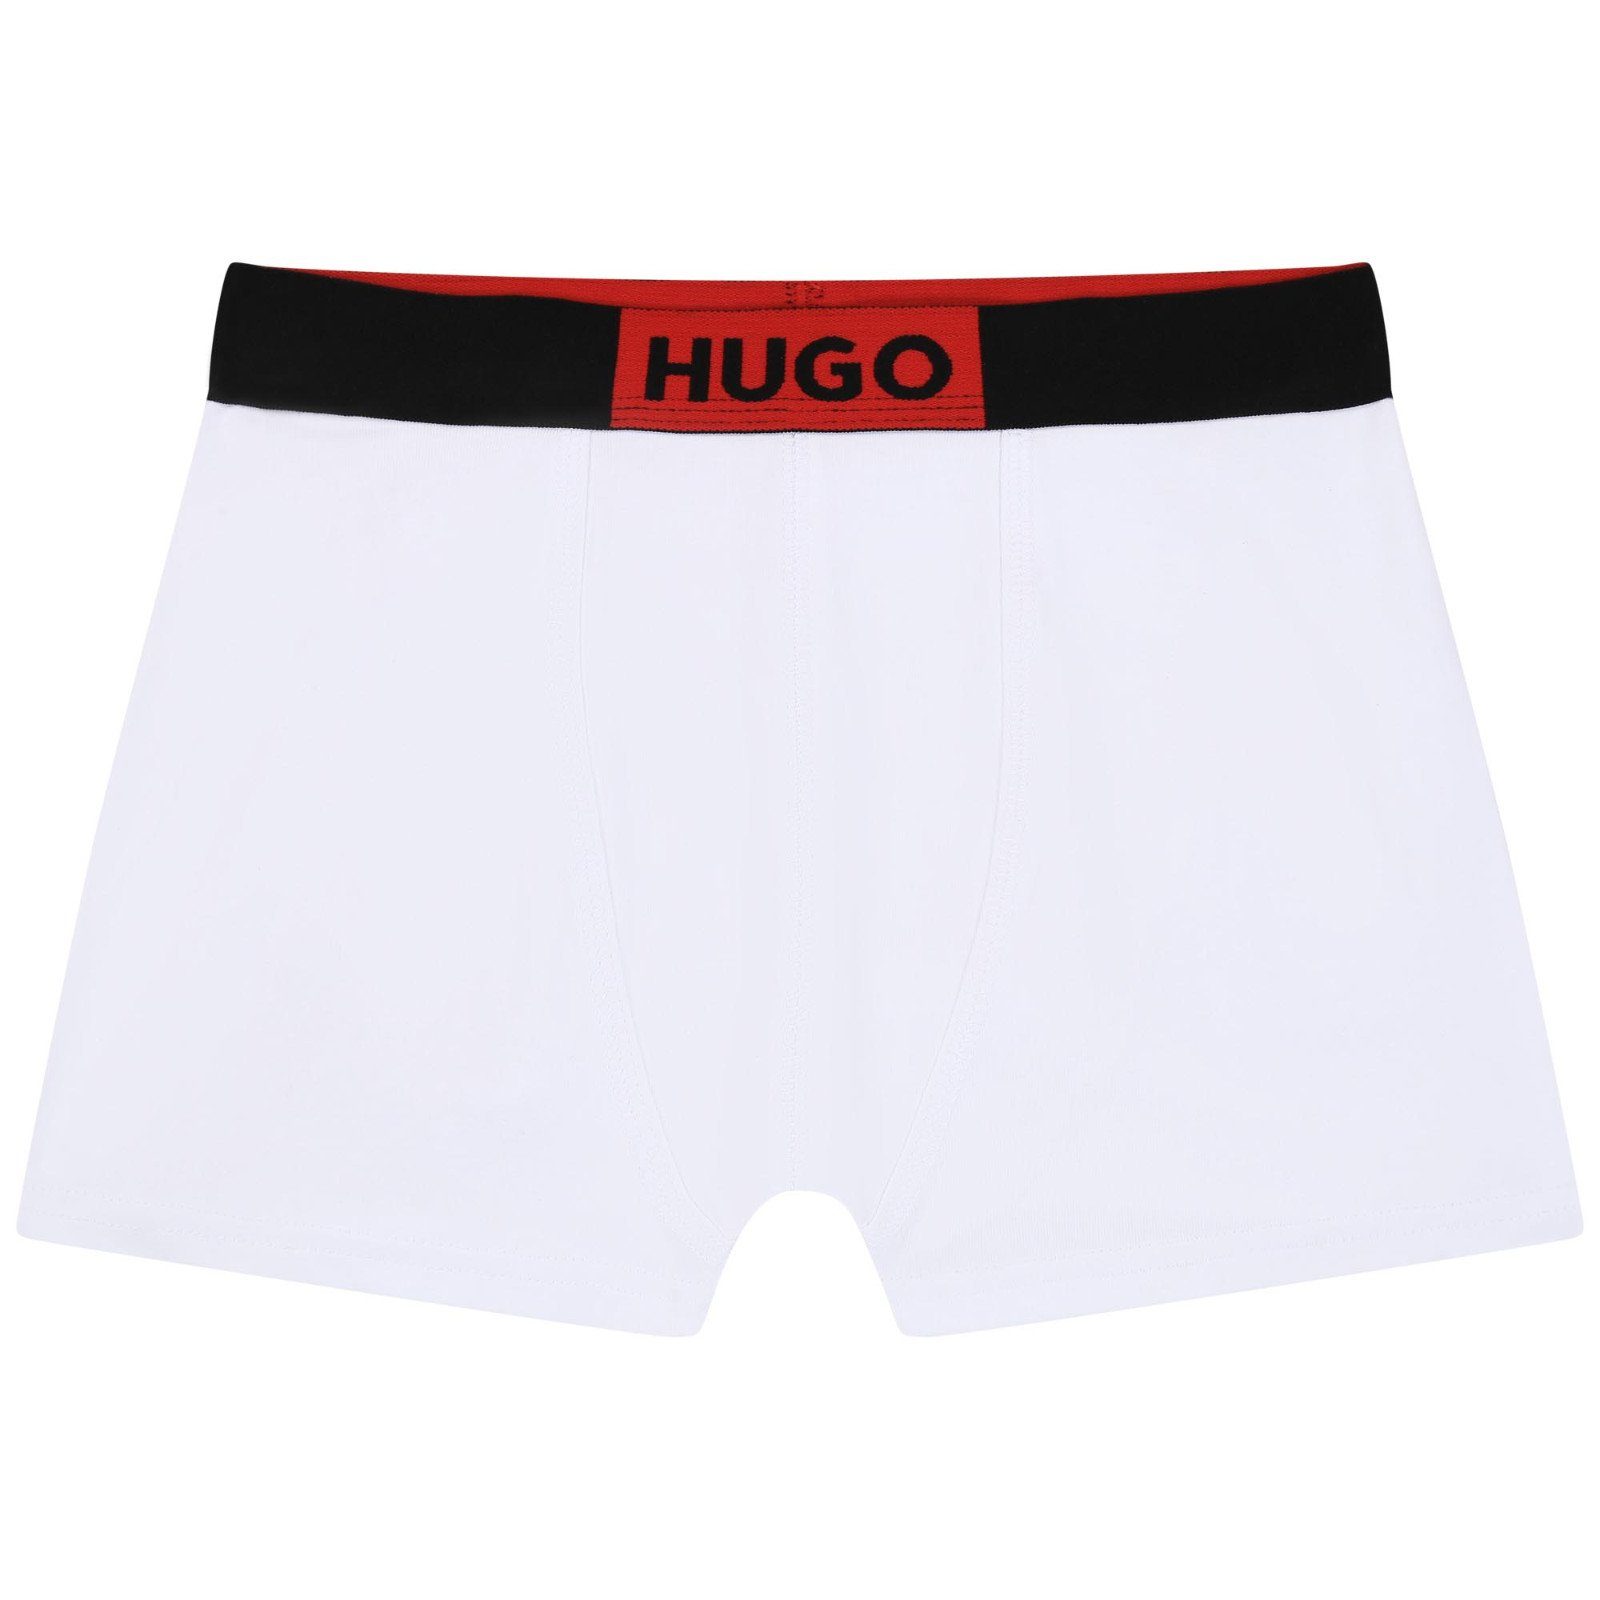 HUGO Boxershorts HUGO Boxershorts Trunks 2er Set schwarz weiß mit Logo